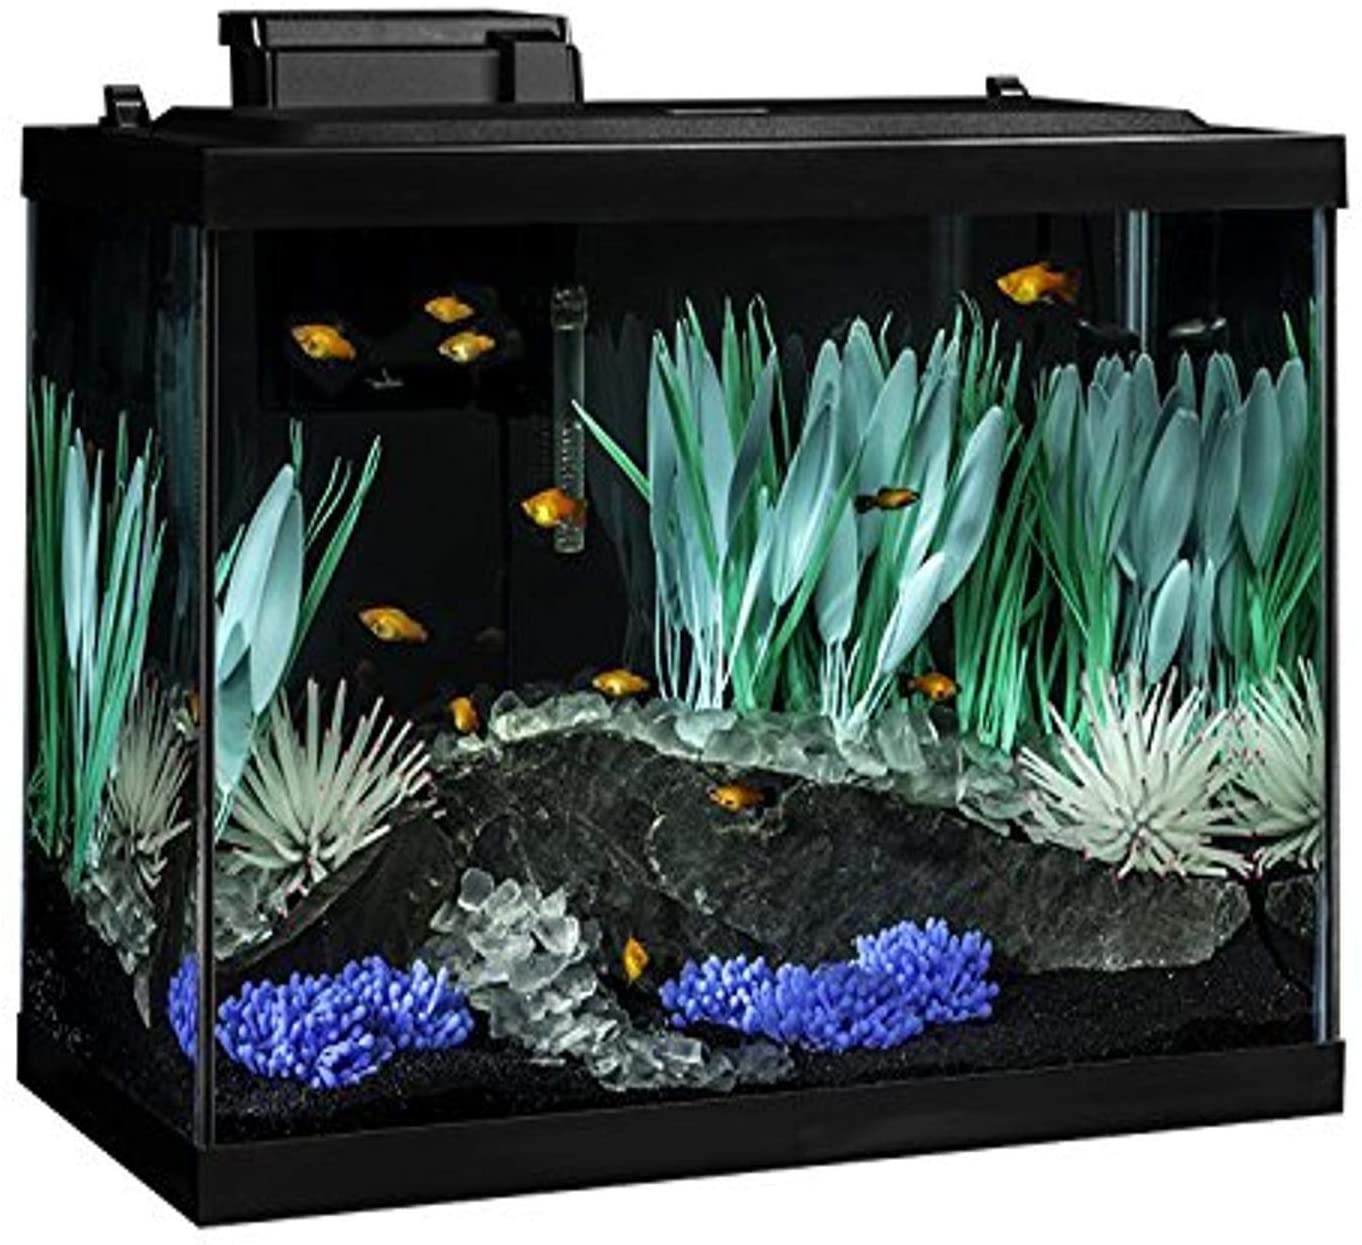 Tetra colorfusion aquarium 20 gallon fish tank kit, includes led